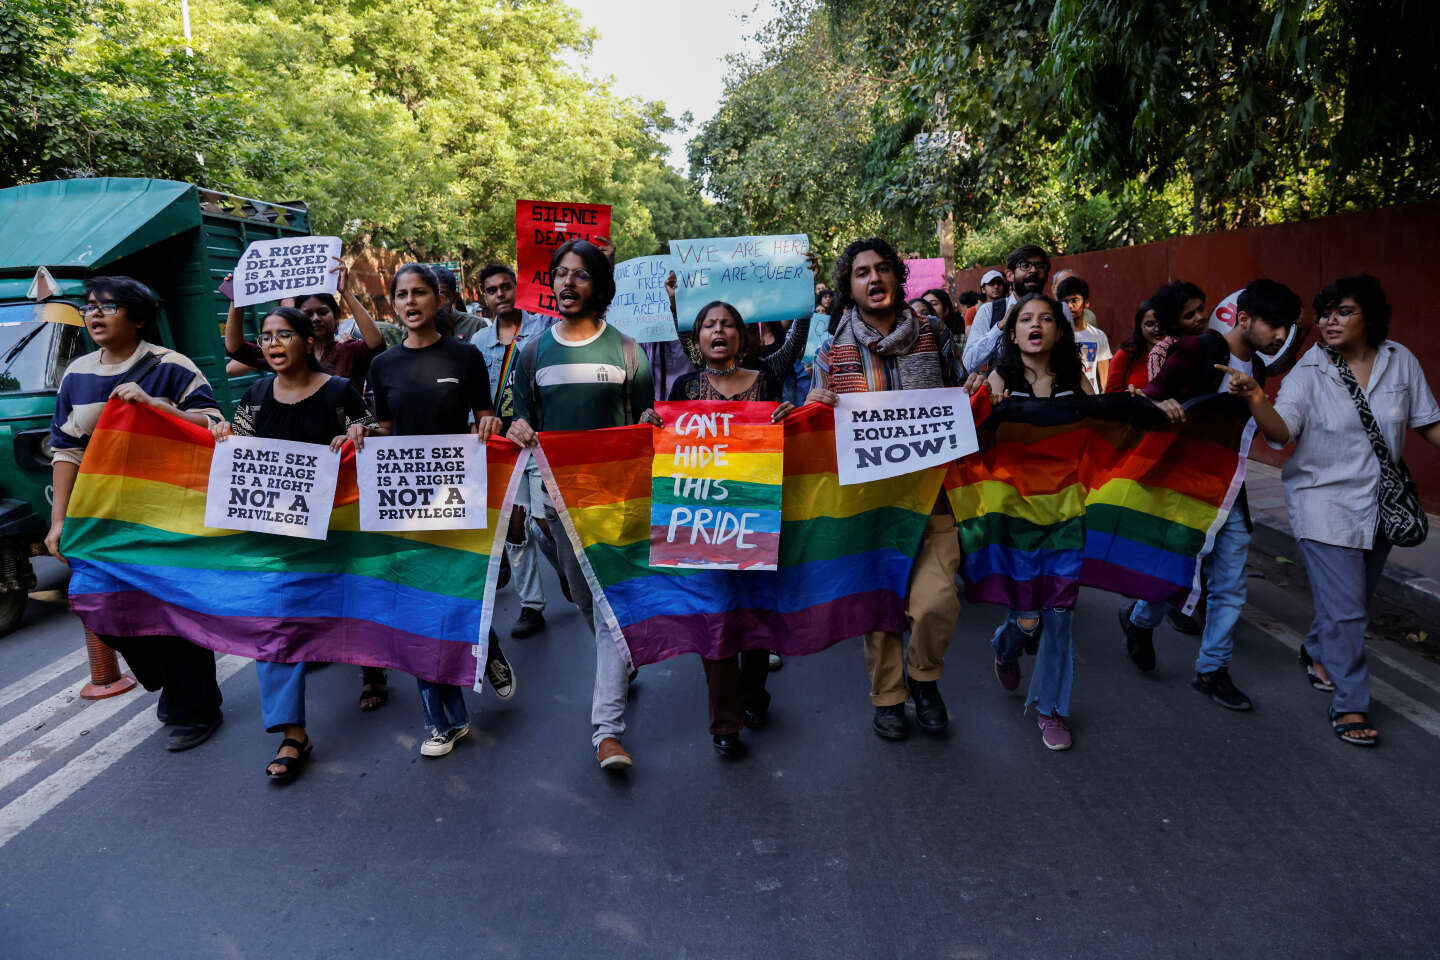 Anushree Sex - India's Supreme Court declines to legalize same-sex marriage